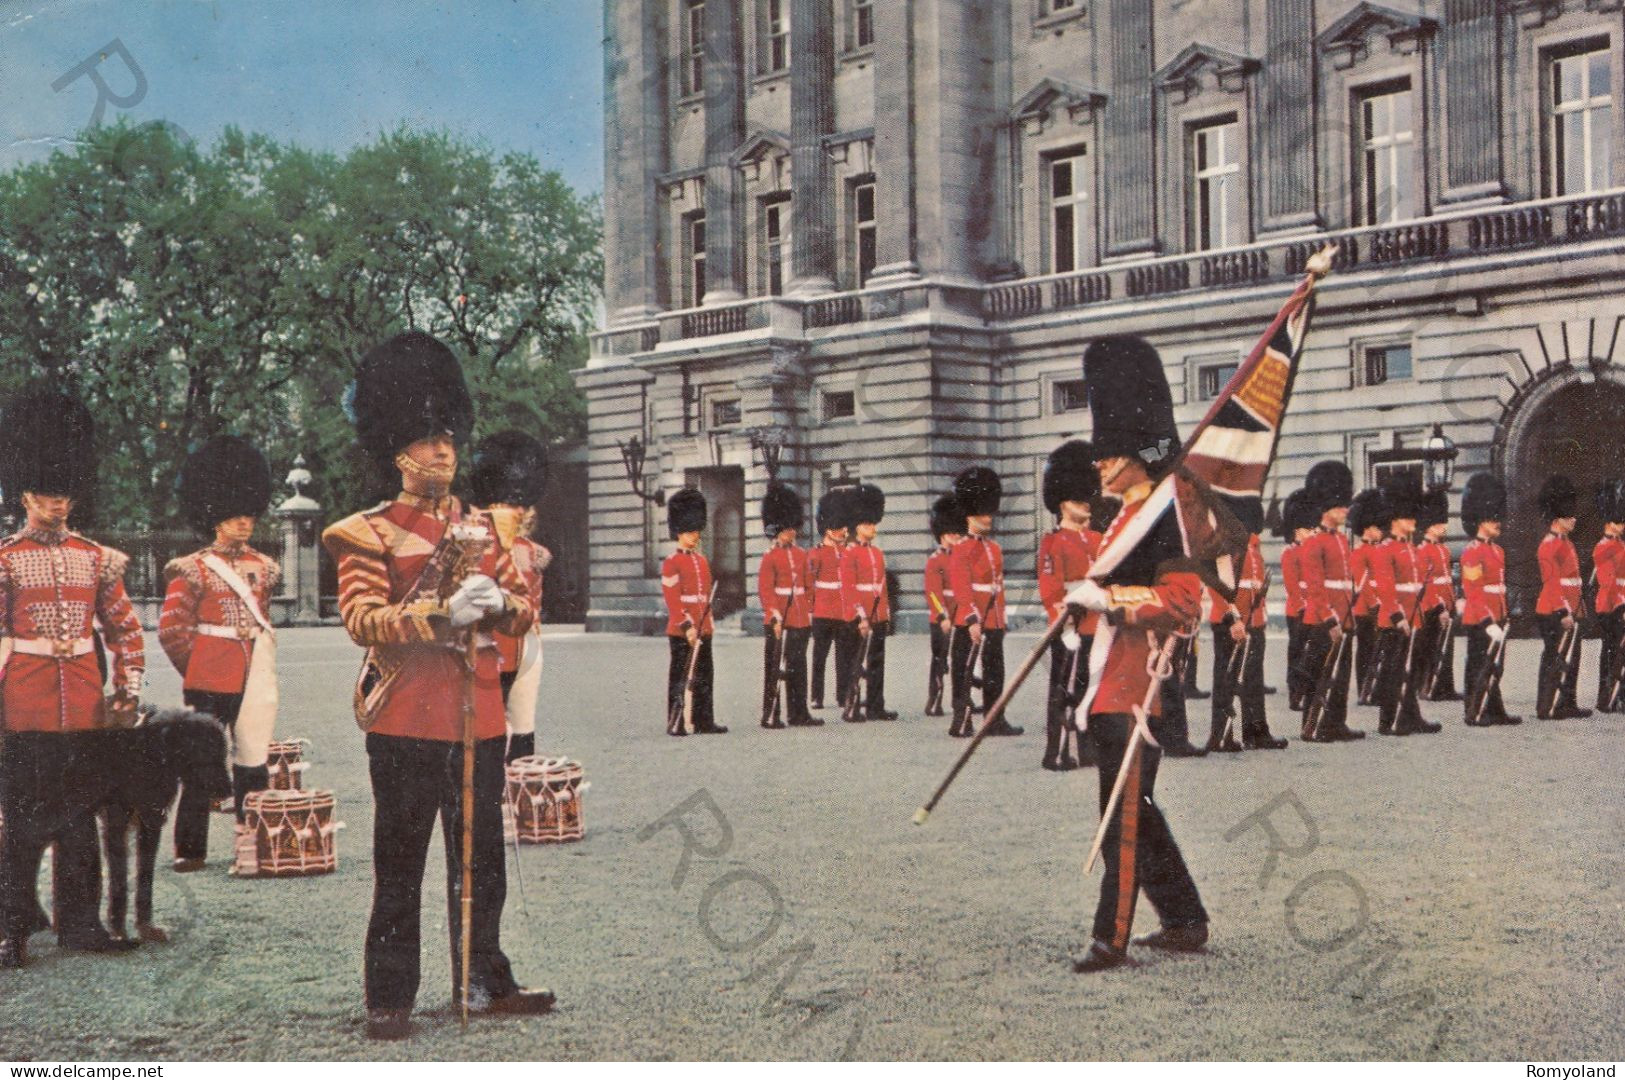 CARTOLINA  LONDON,INGHILTERRA,REGNO UNITO-CHANGING THE GUARD CEREMONY AT BUCKINGHAM PALACE-BOLLO STACCATO,VIAGGIATA 1971 - Buckingham Palace